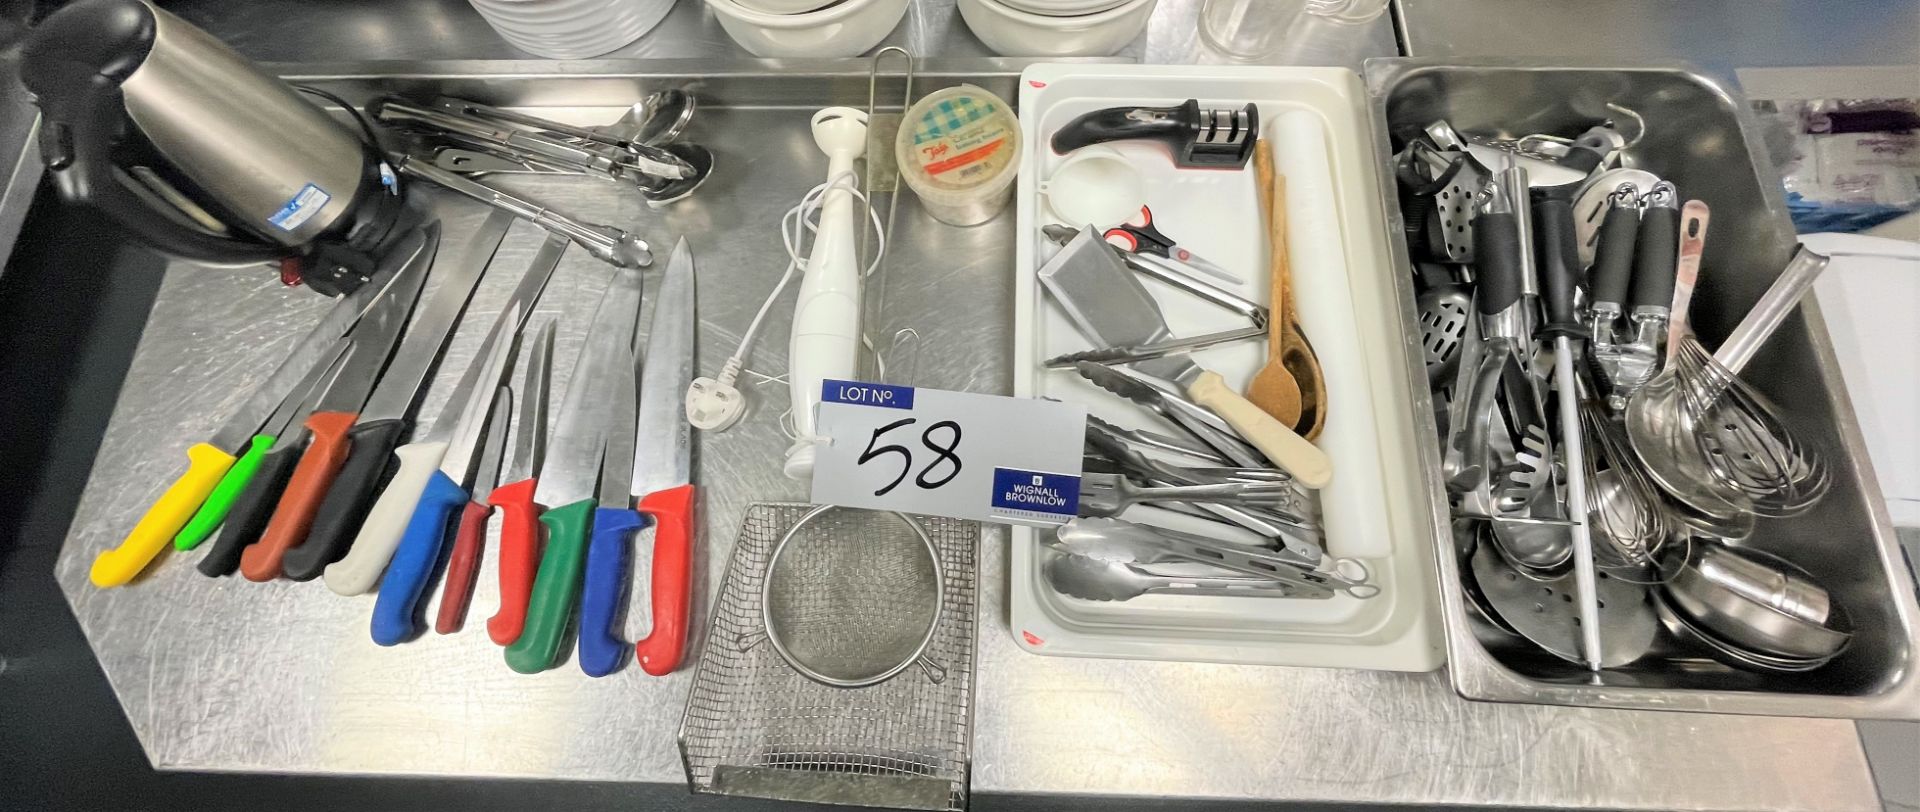 Assorted Kitchen Utensils and Equipment.